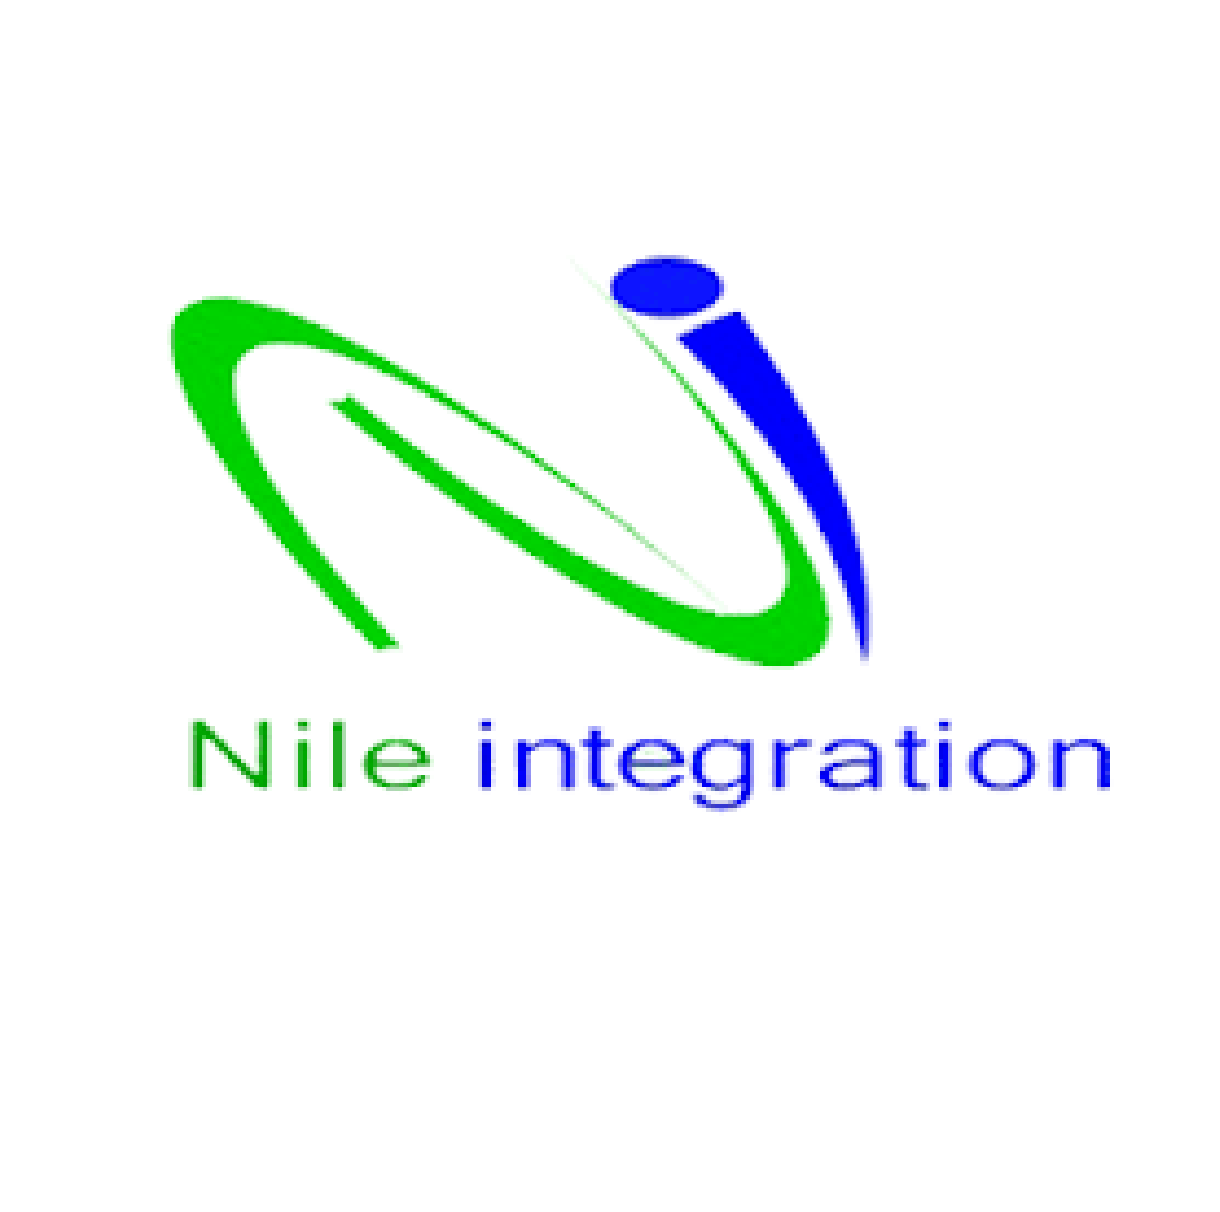 Nile integration